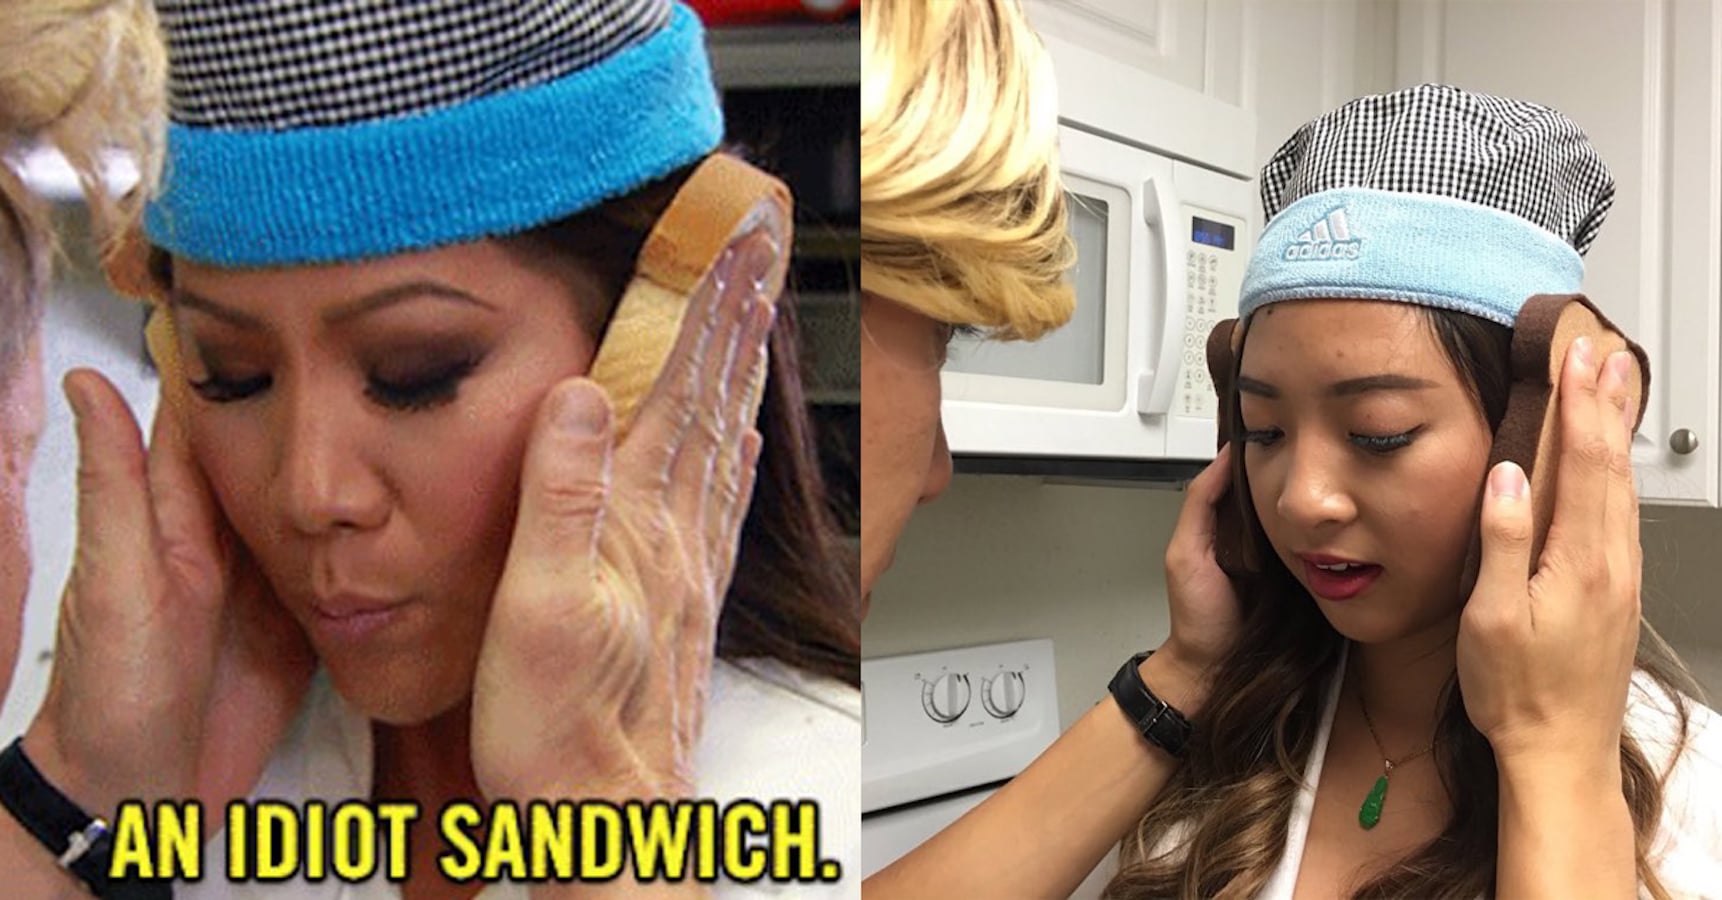 Gordon Ramsay to sell 'Idiot Sandwich' earmuffs based on viral meme